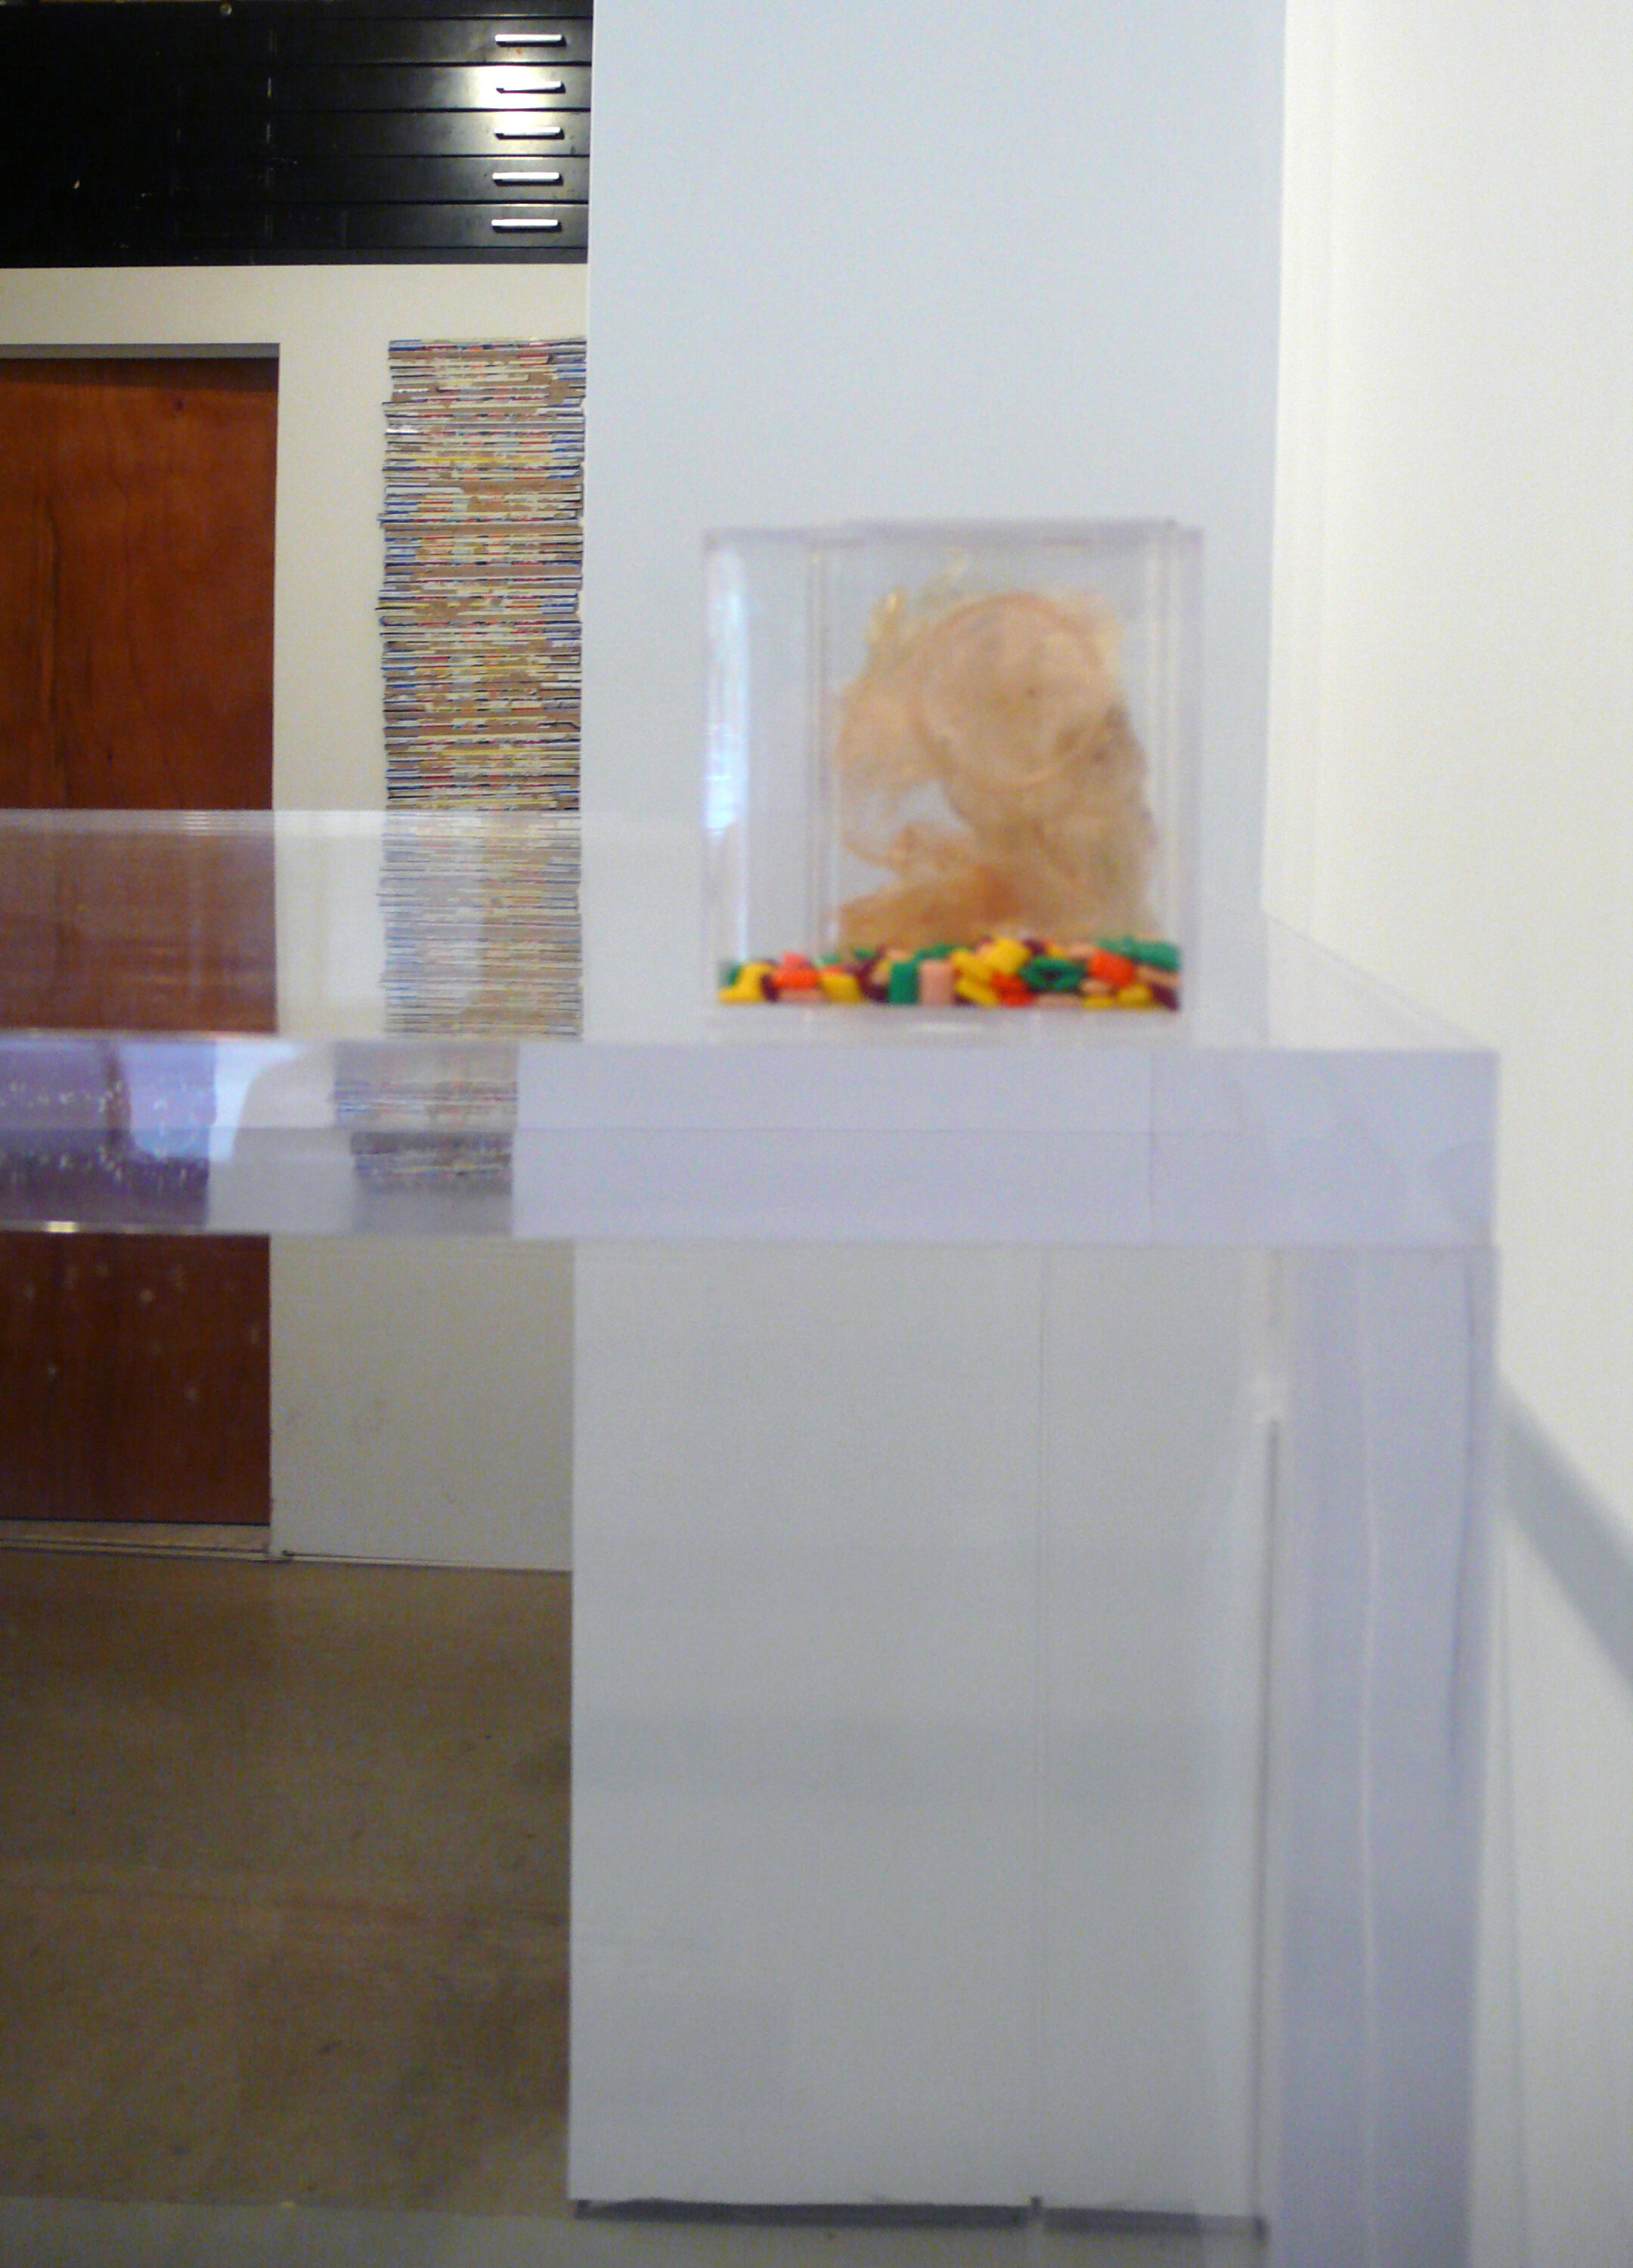 Installation image from the 2010 exhibition, Carlos Sandoval De Leon, at Cindy Rucker Gallery